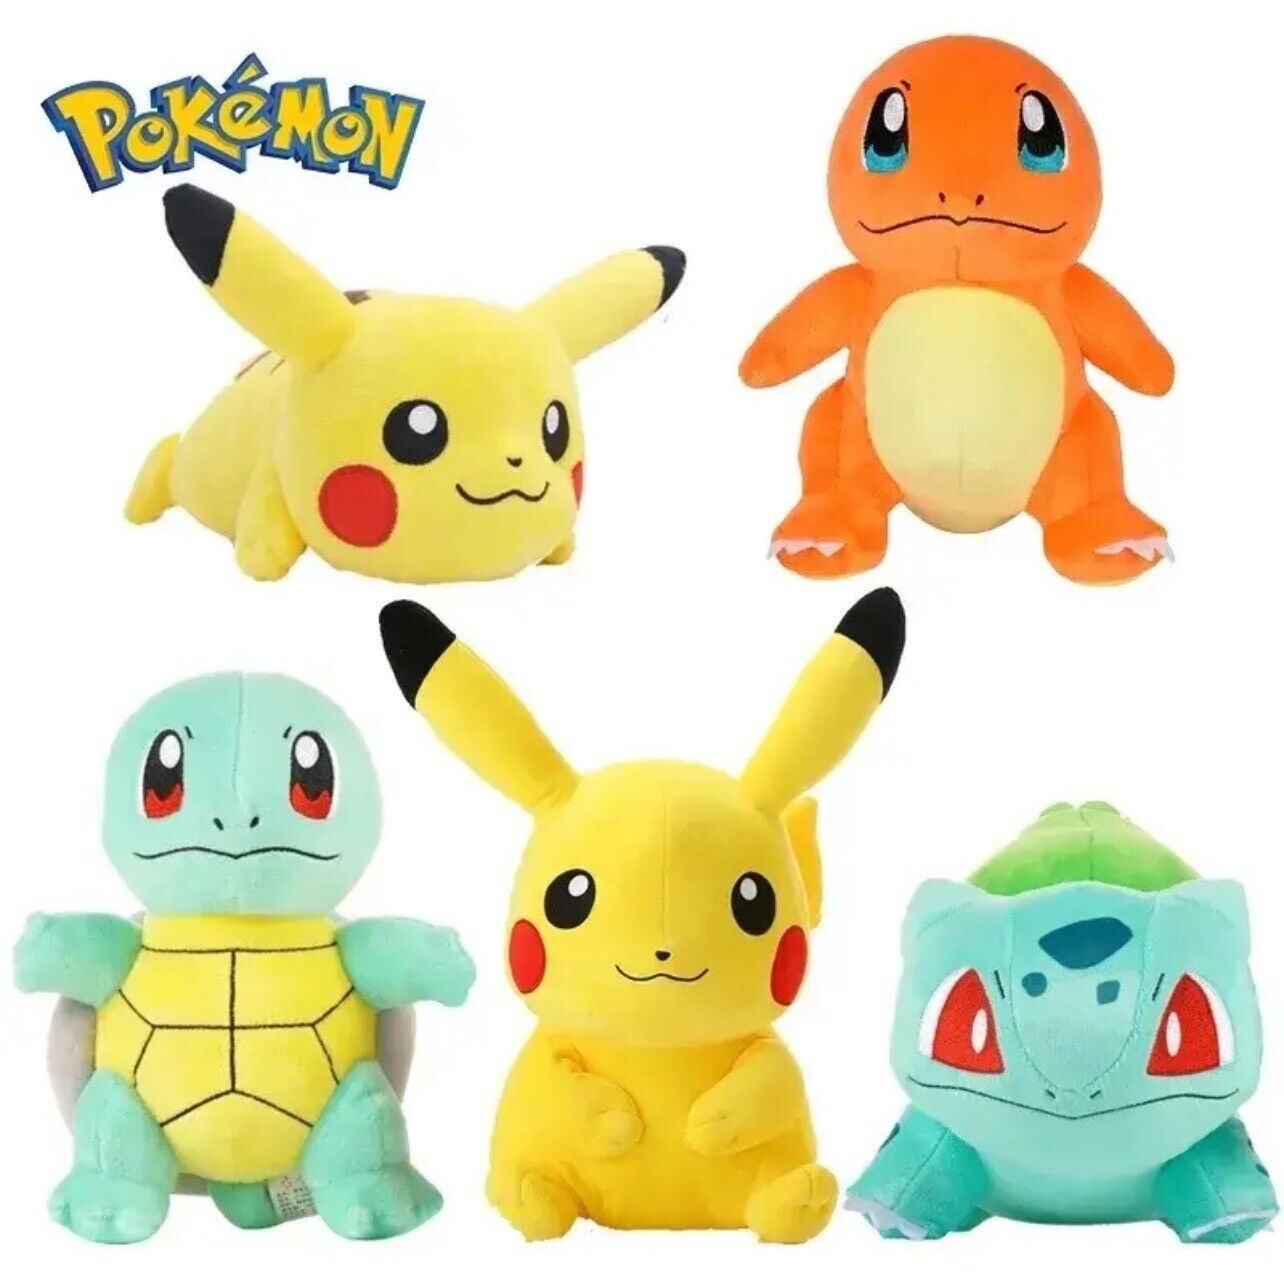 Pokémon Pikachu Plush Doll Toy Anime, Squirtle Charmander Bulbasaur Psyduck Toy